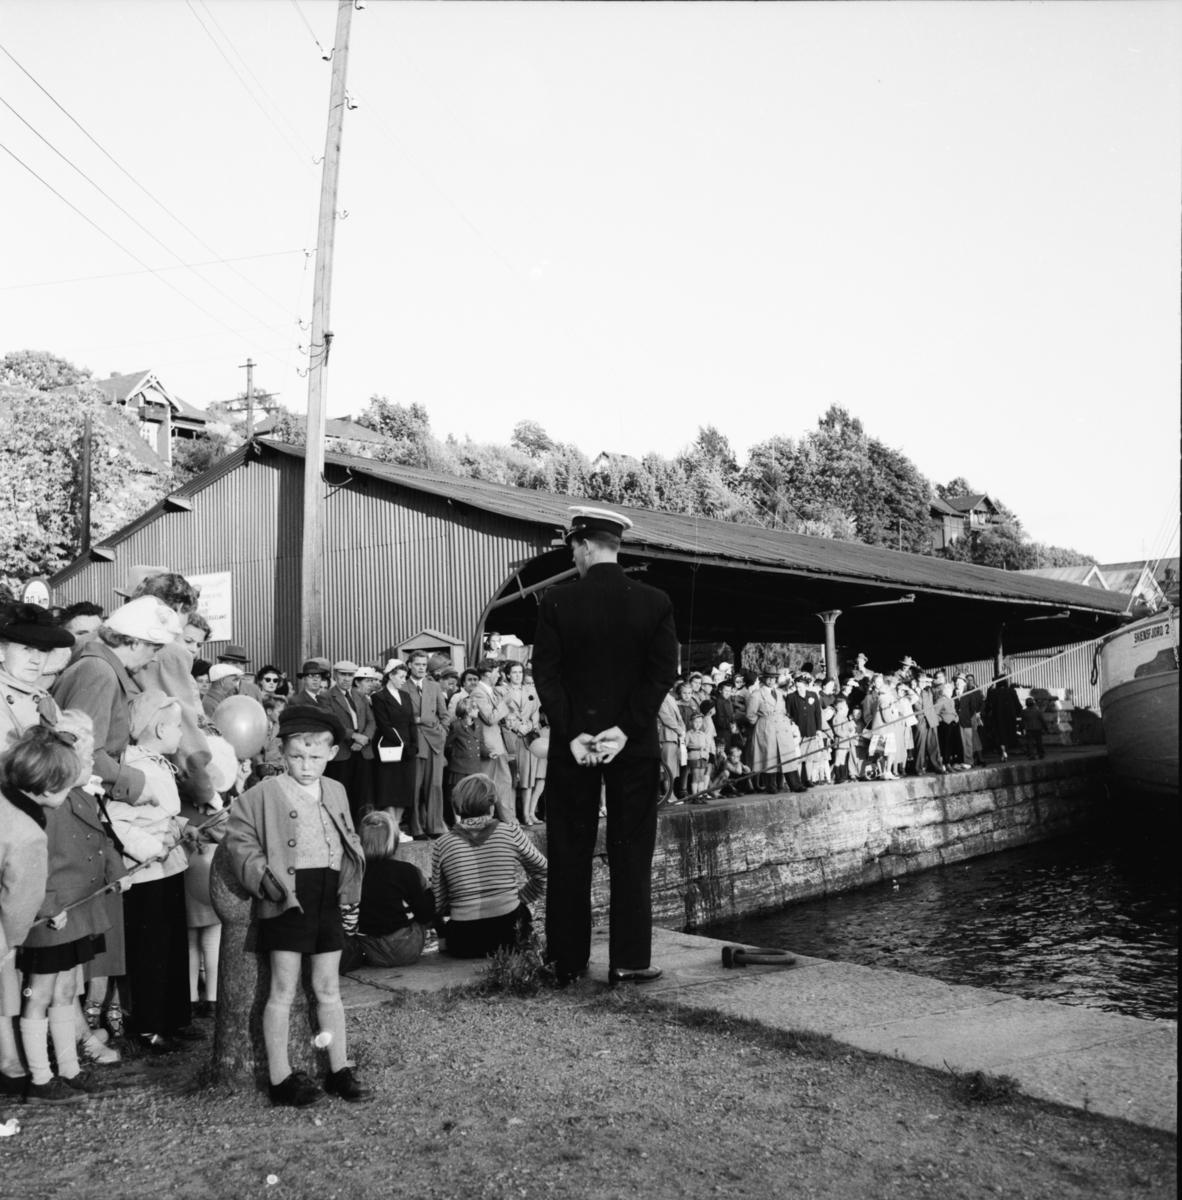 Vardens arkiv. "Sanitetsforeningen arr. brygge- løyer, hawai pike" 29.08.1953